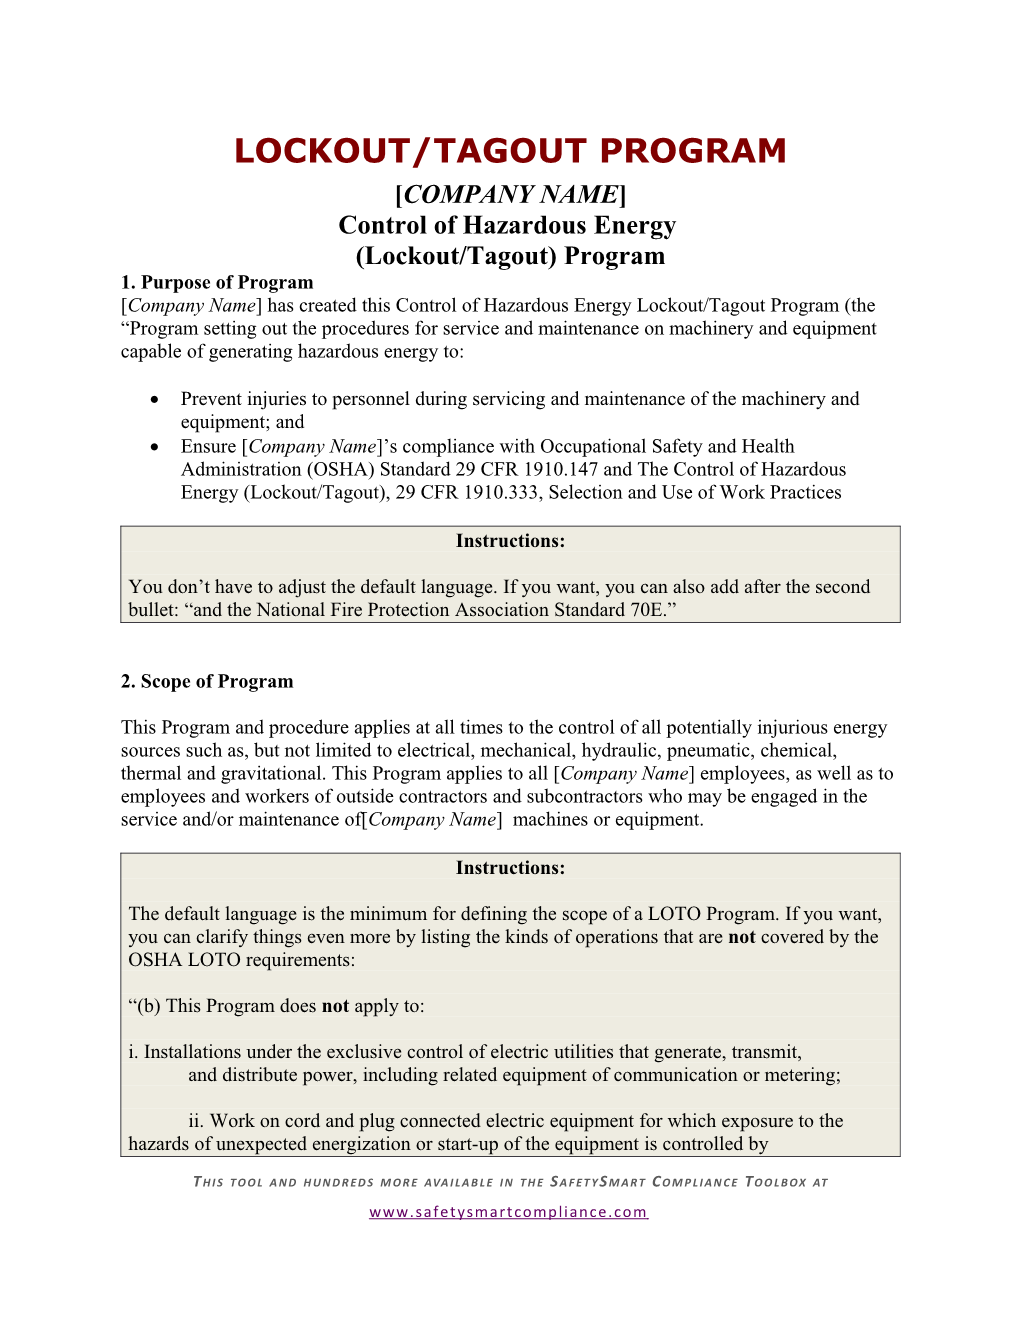 Model Lockout/Tagout Program